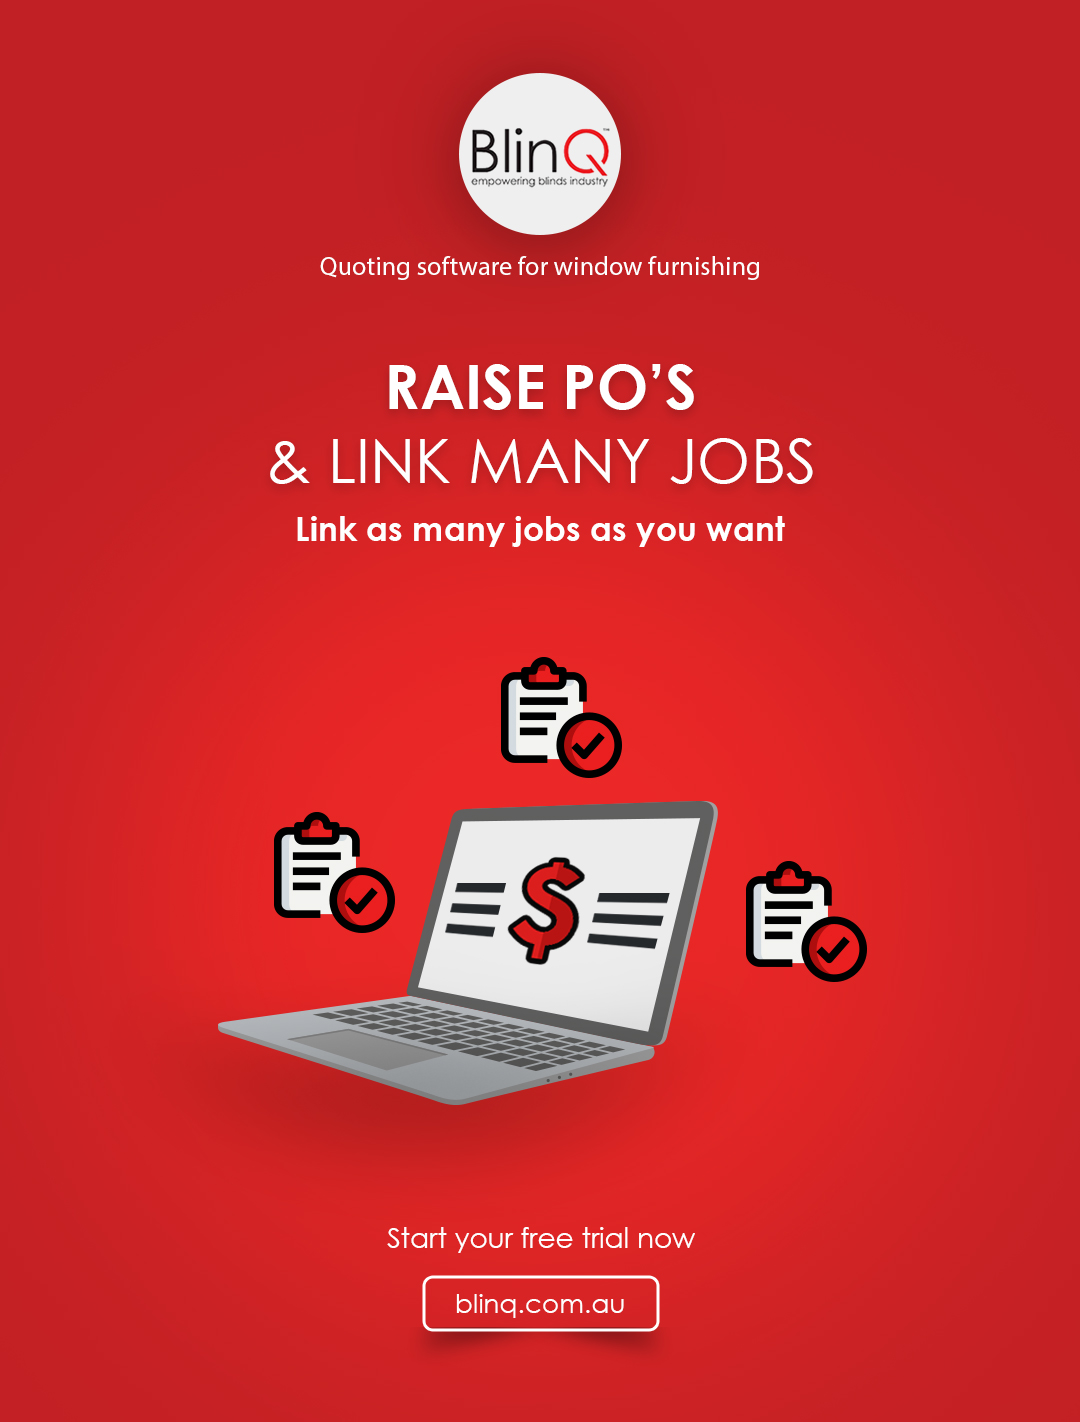 Raise POâ€™s & link many jobs